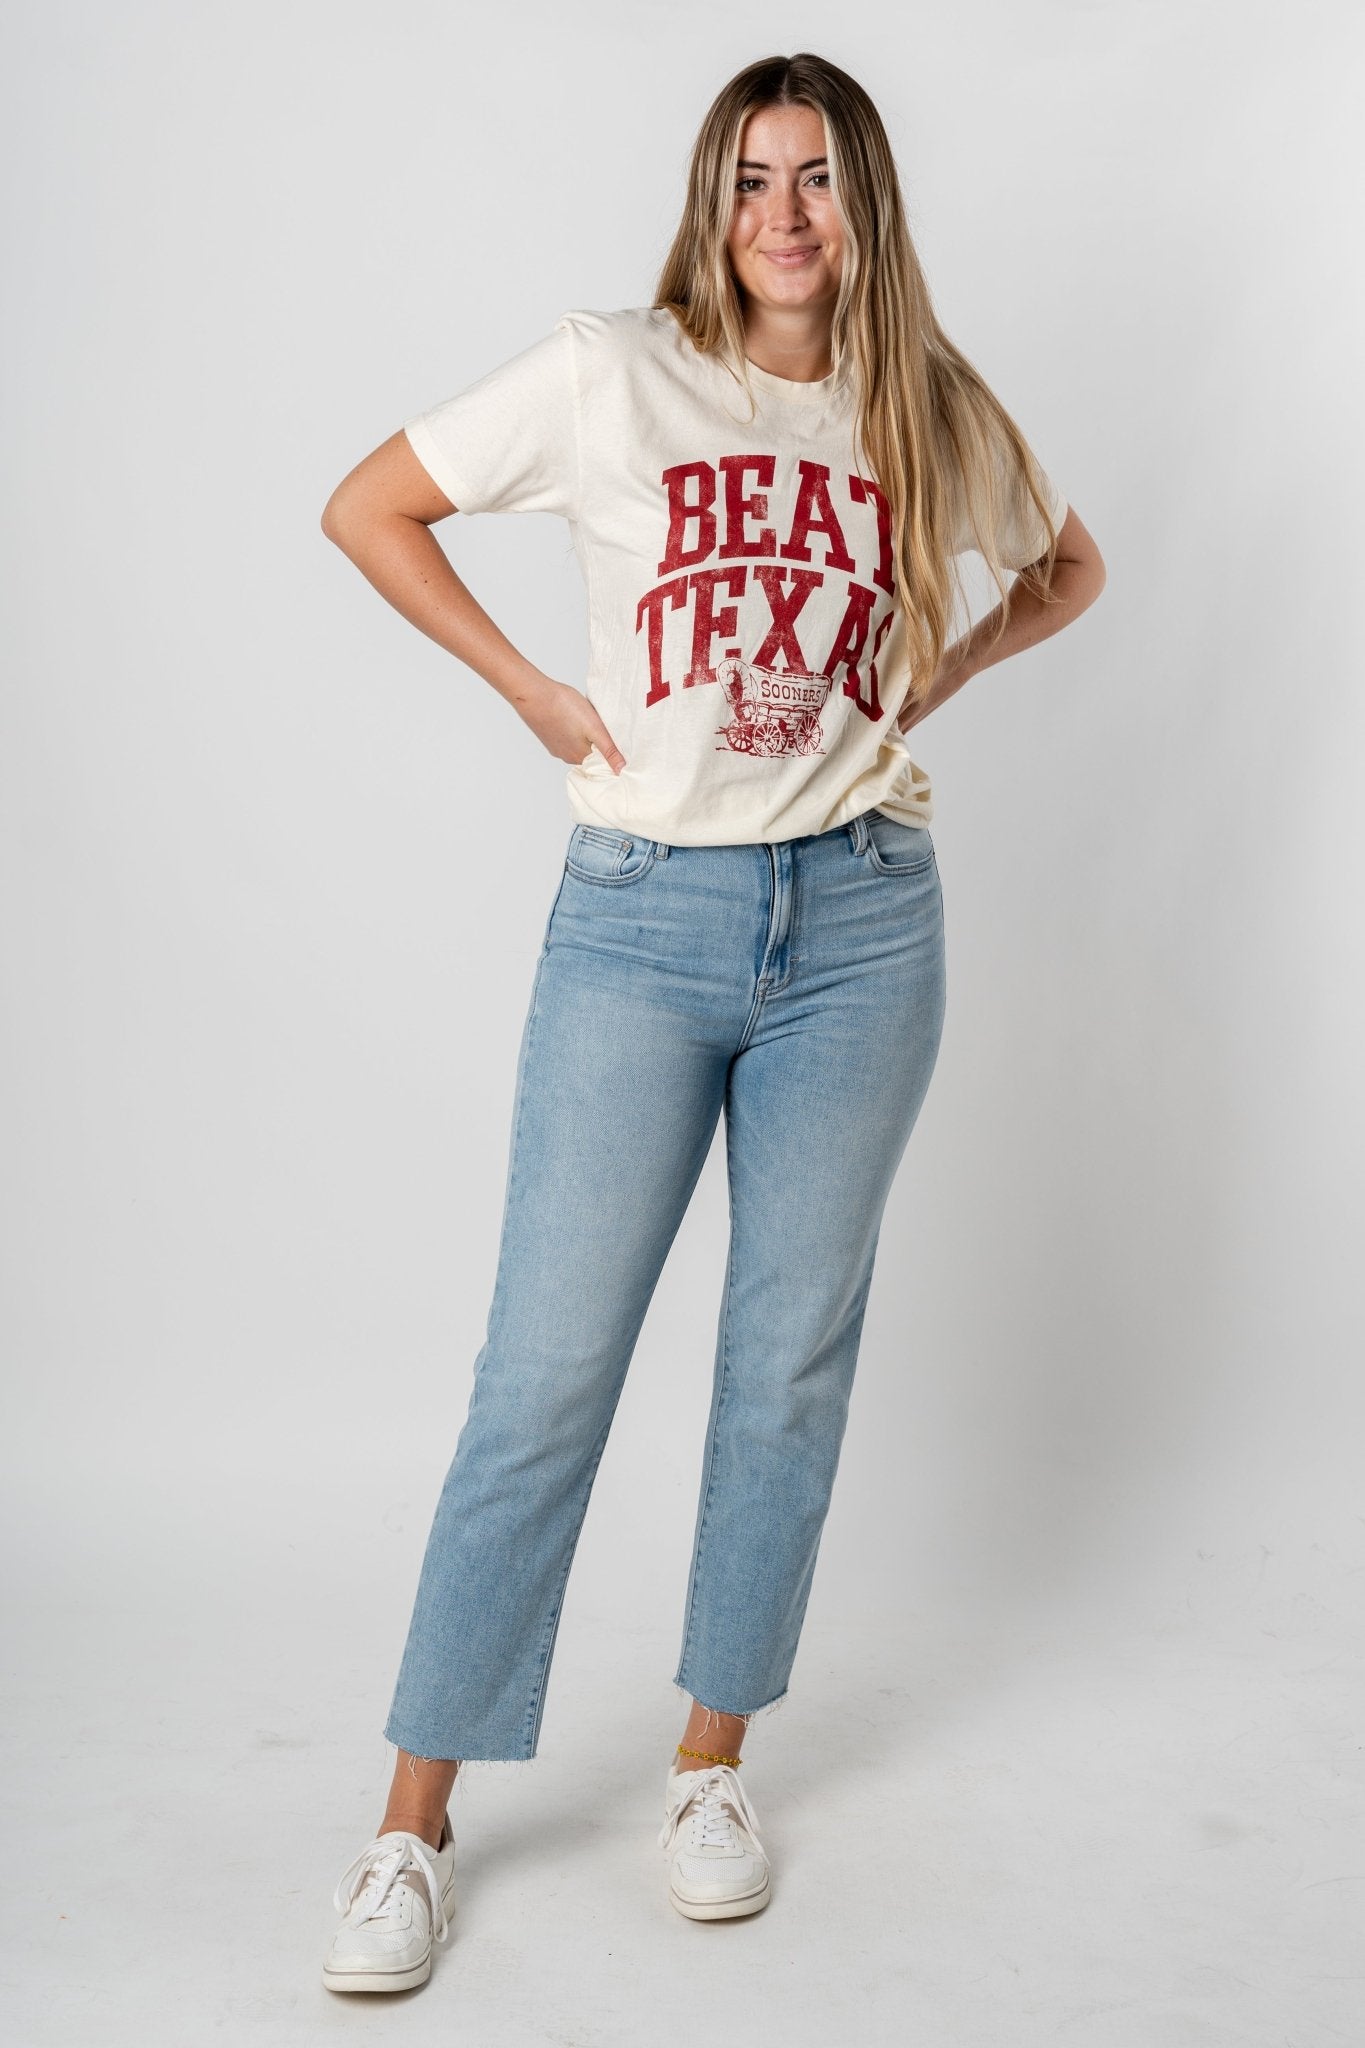 OU OU Beat Texas Schooner unisex short sleeve t-shirt natural T-shirts | Lush Fashion Lounge Trendy Oklahoma University Sooners Apparel & Cute Gameday T-Shirts